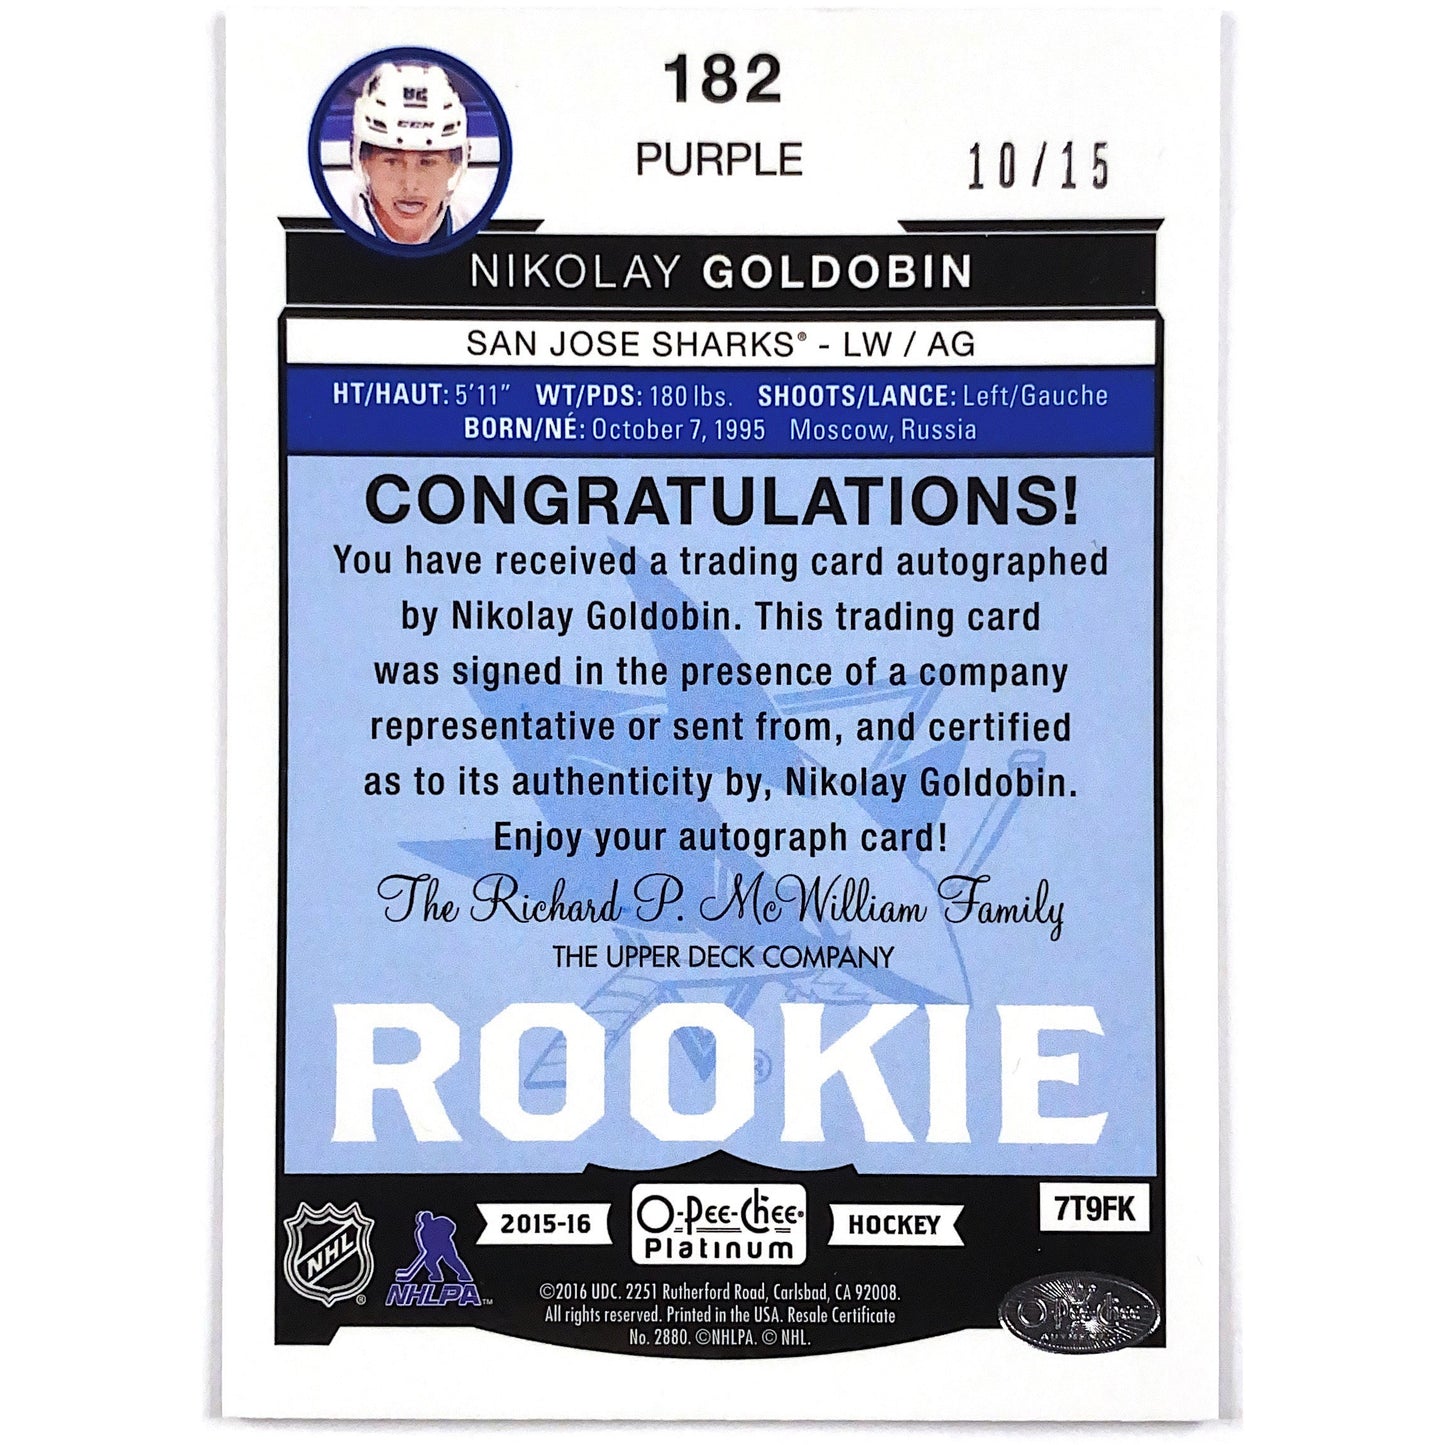 2015-16 O-Pee-Chee Platinum Nikolay Goldobin Purple Rainbow Rookie Auto /15